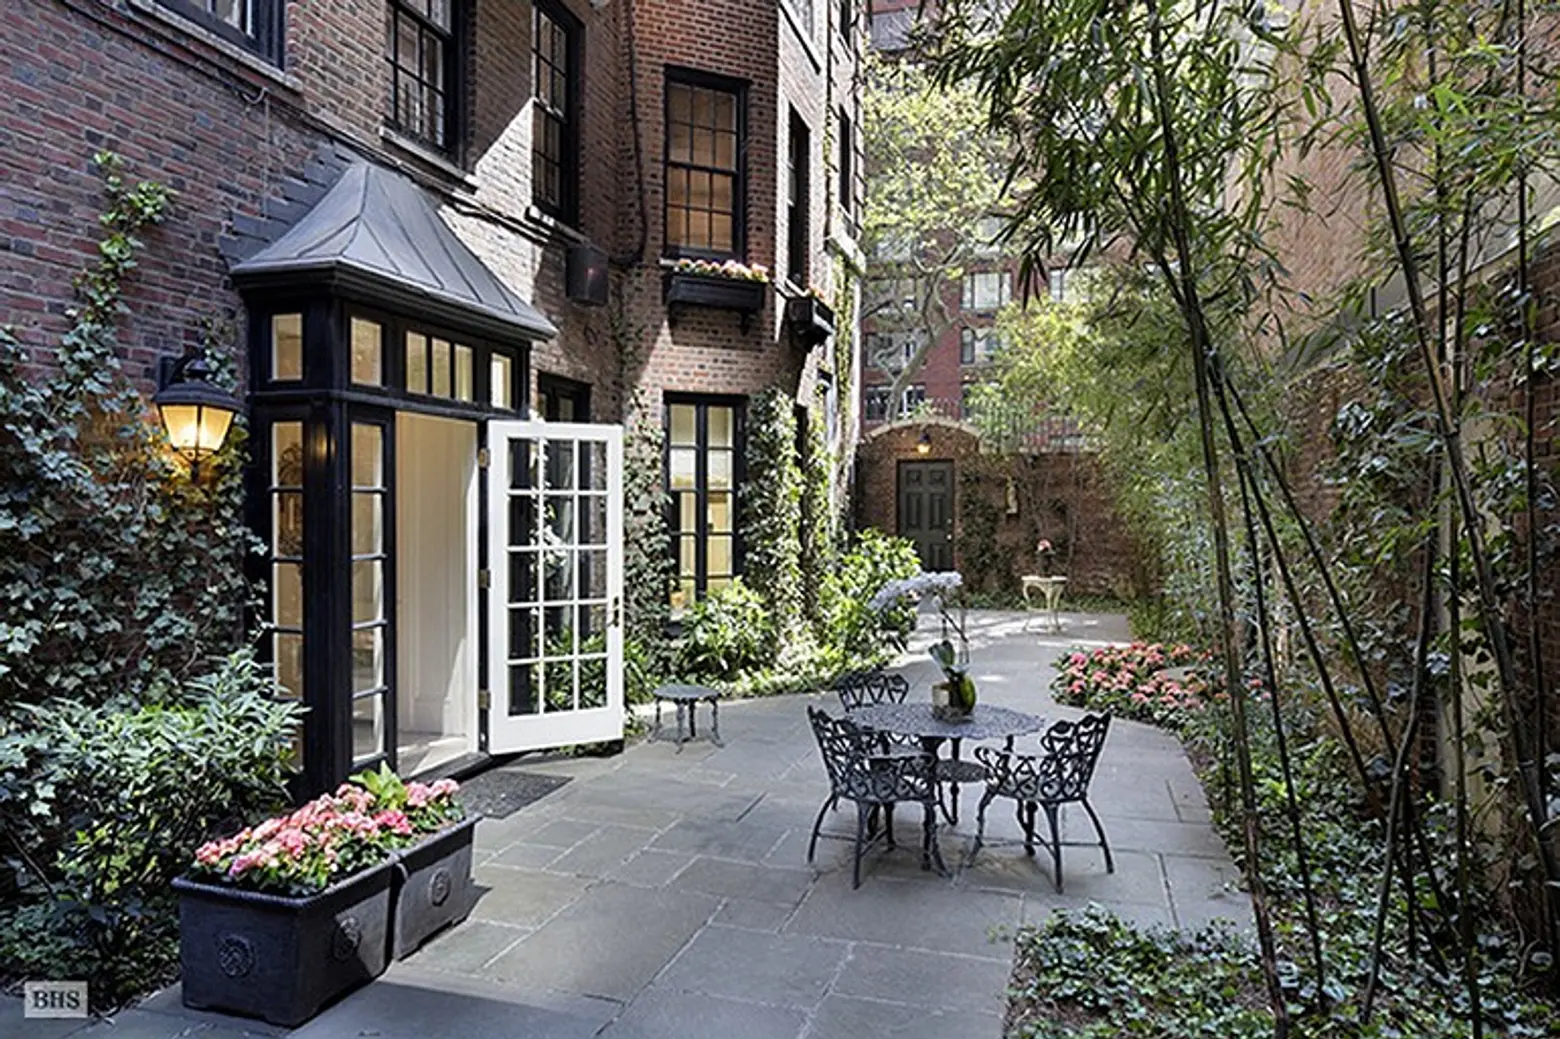 Former Vanity Fair editor Tina Brown lists elegant Sutton Place triplex for $9.75M